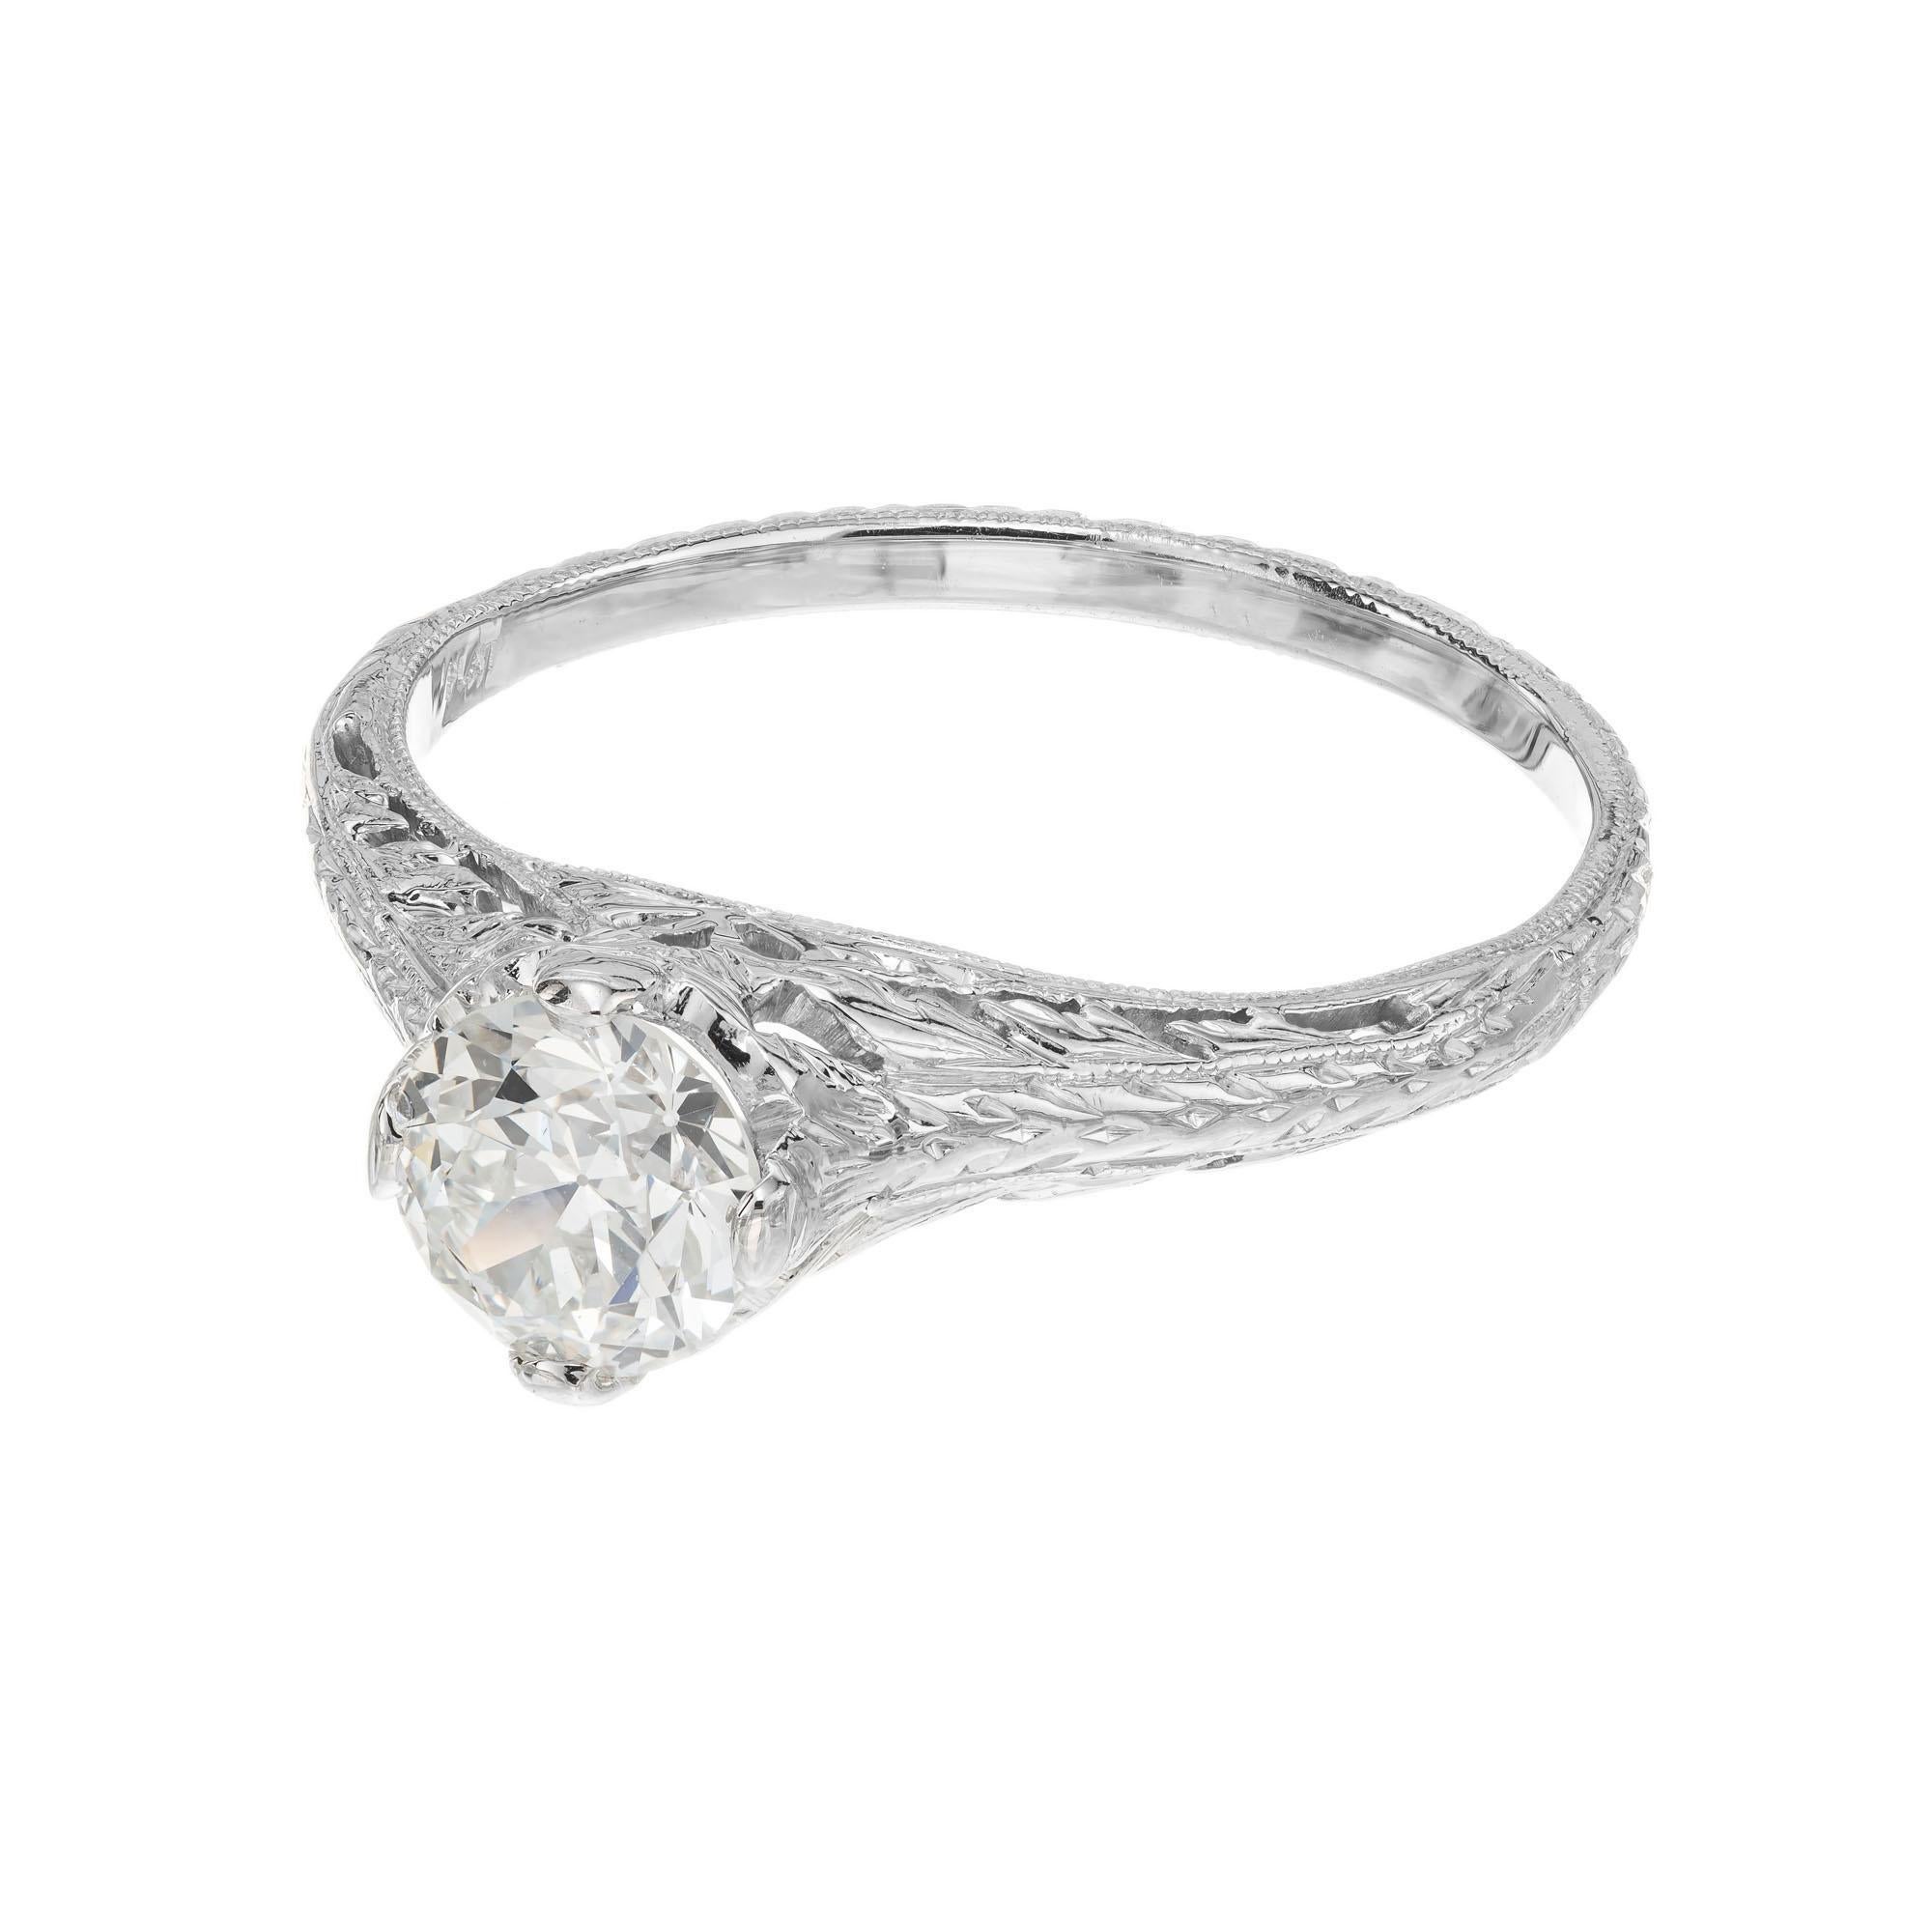 63 carat diamond ring